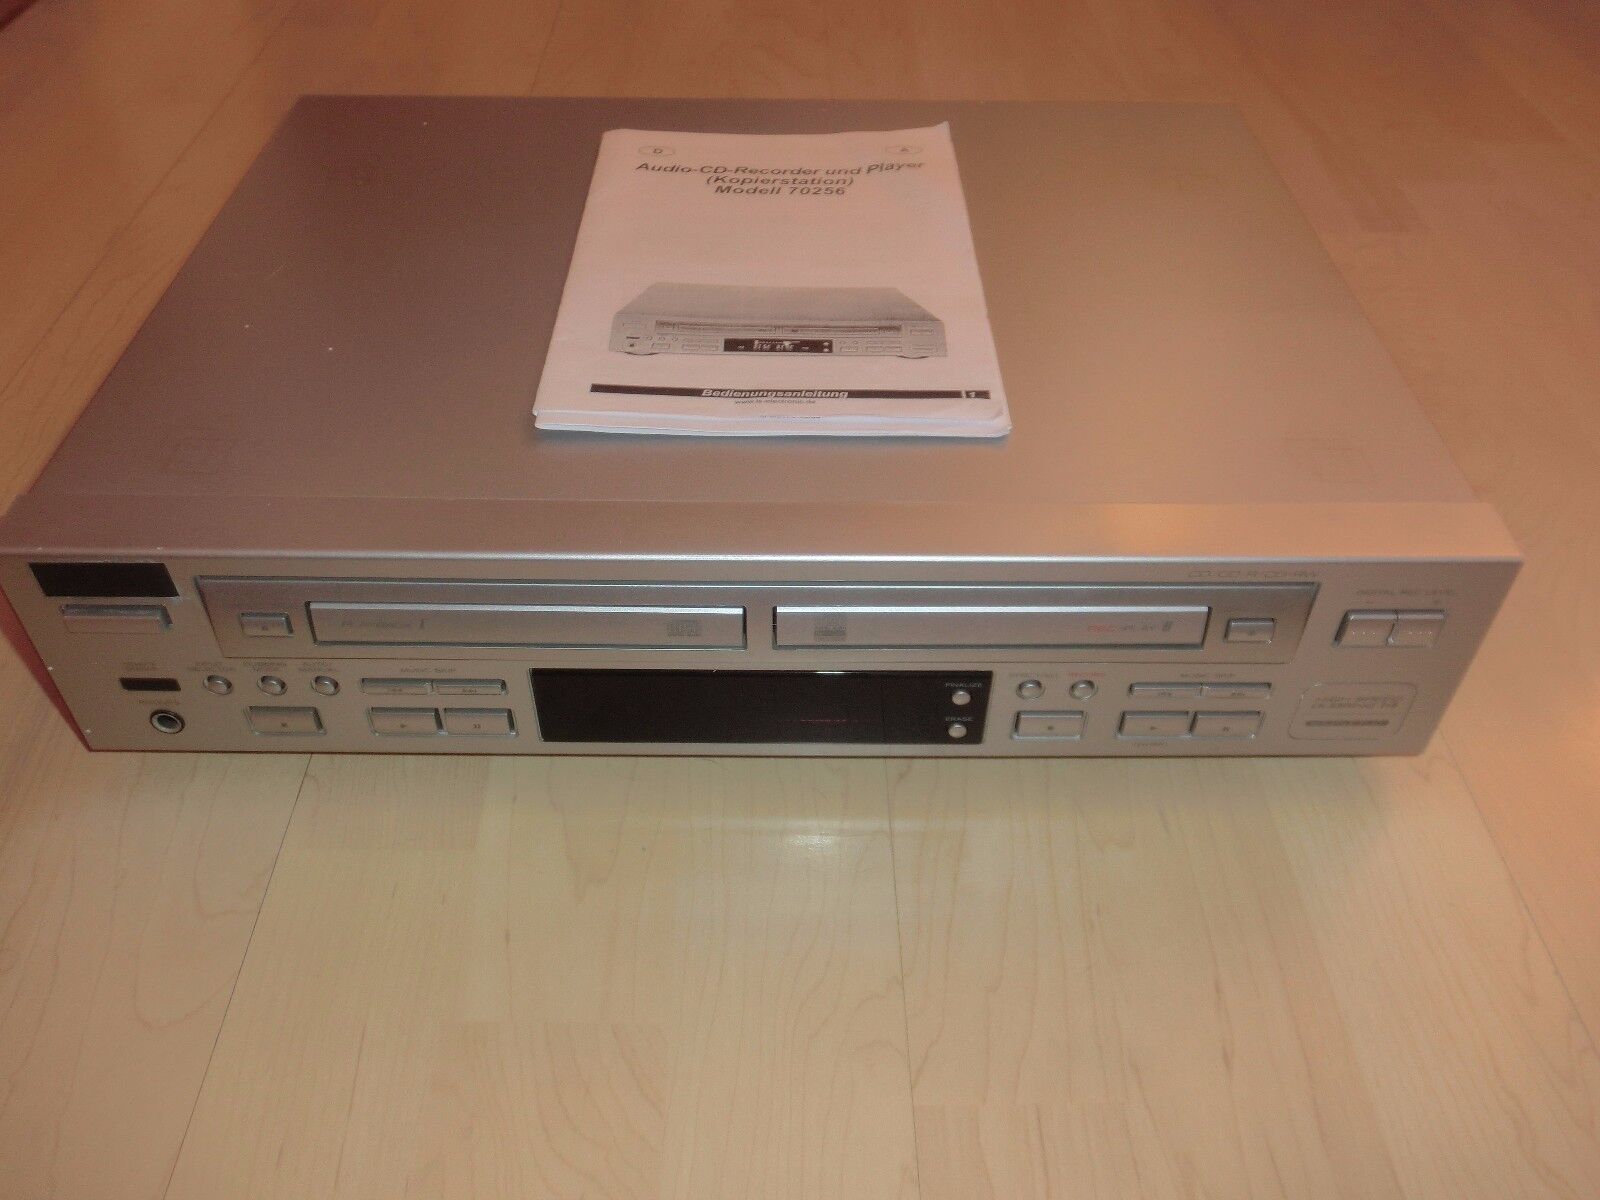 LandS 70256 Audio CD-Recorder, Doppel-Laufwerk, DEFEKT liest keine Discs